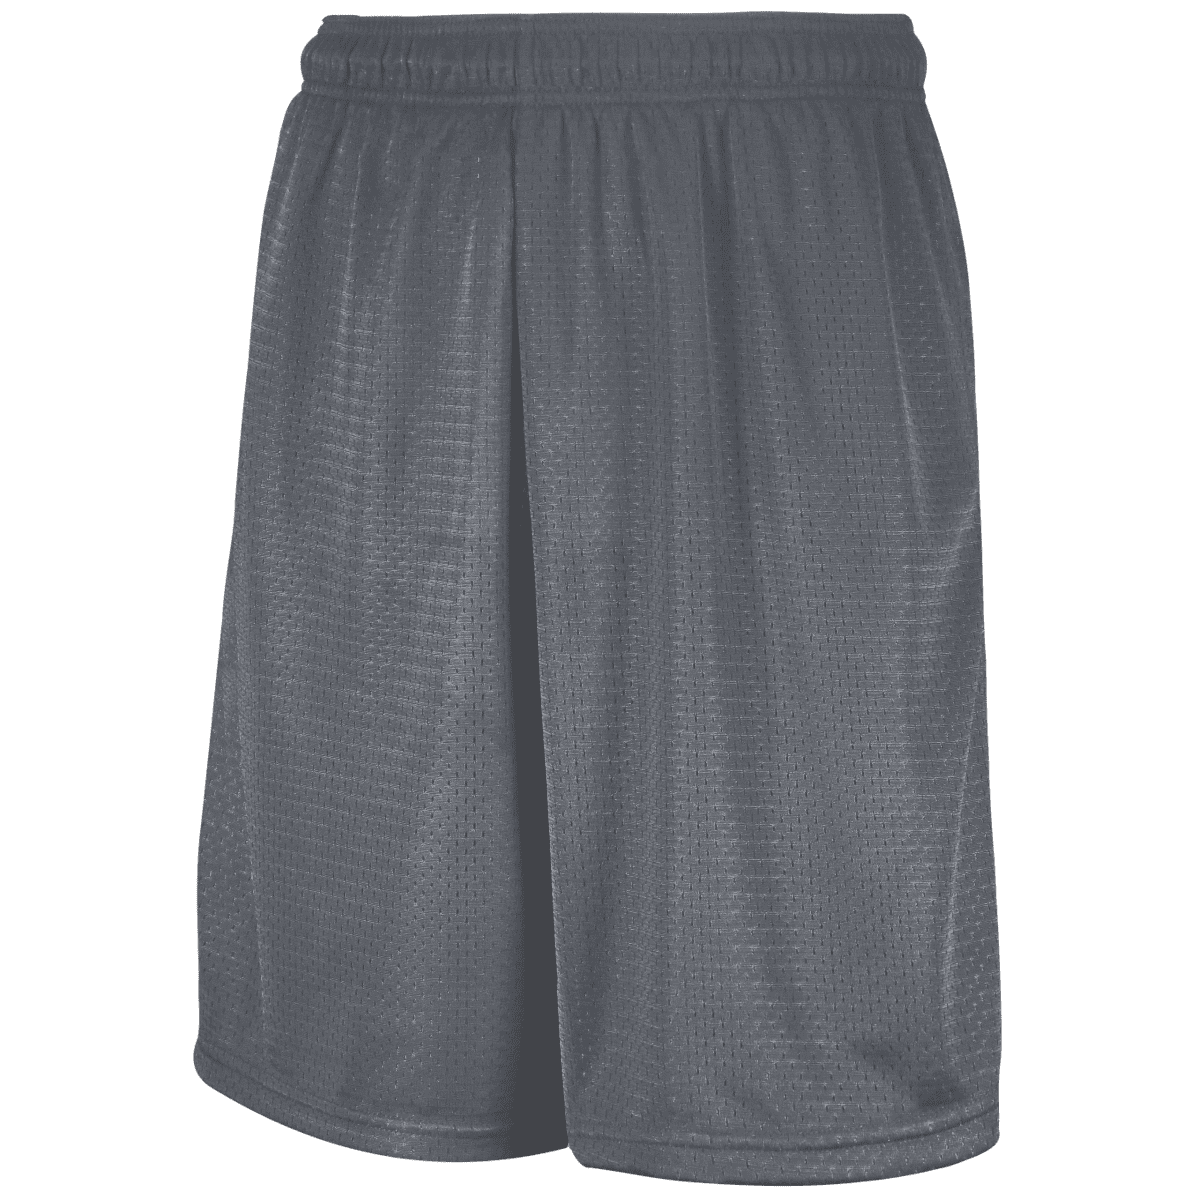 Russell Athletic Men athletic shorts - Walmart.com